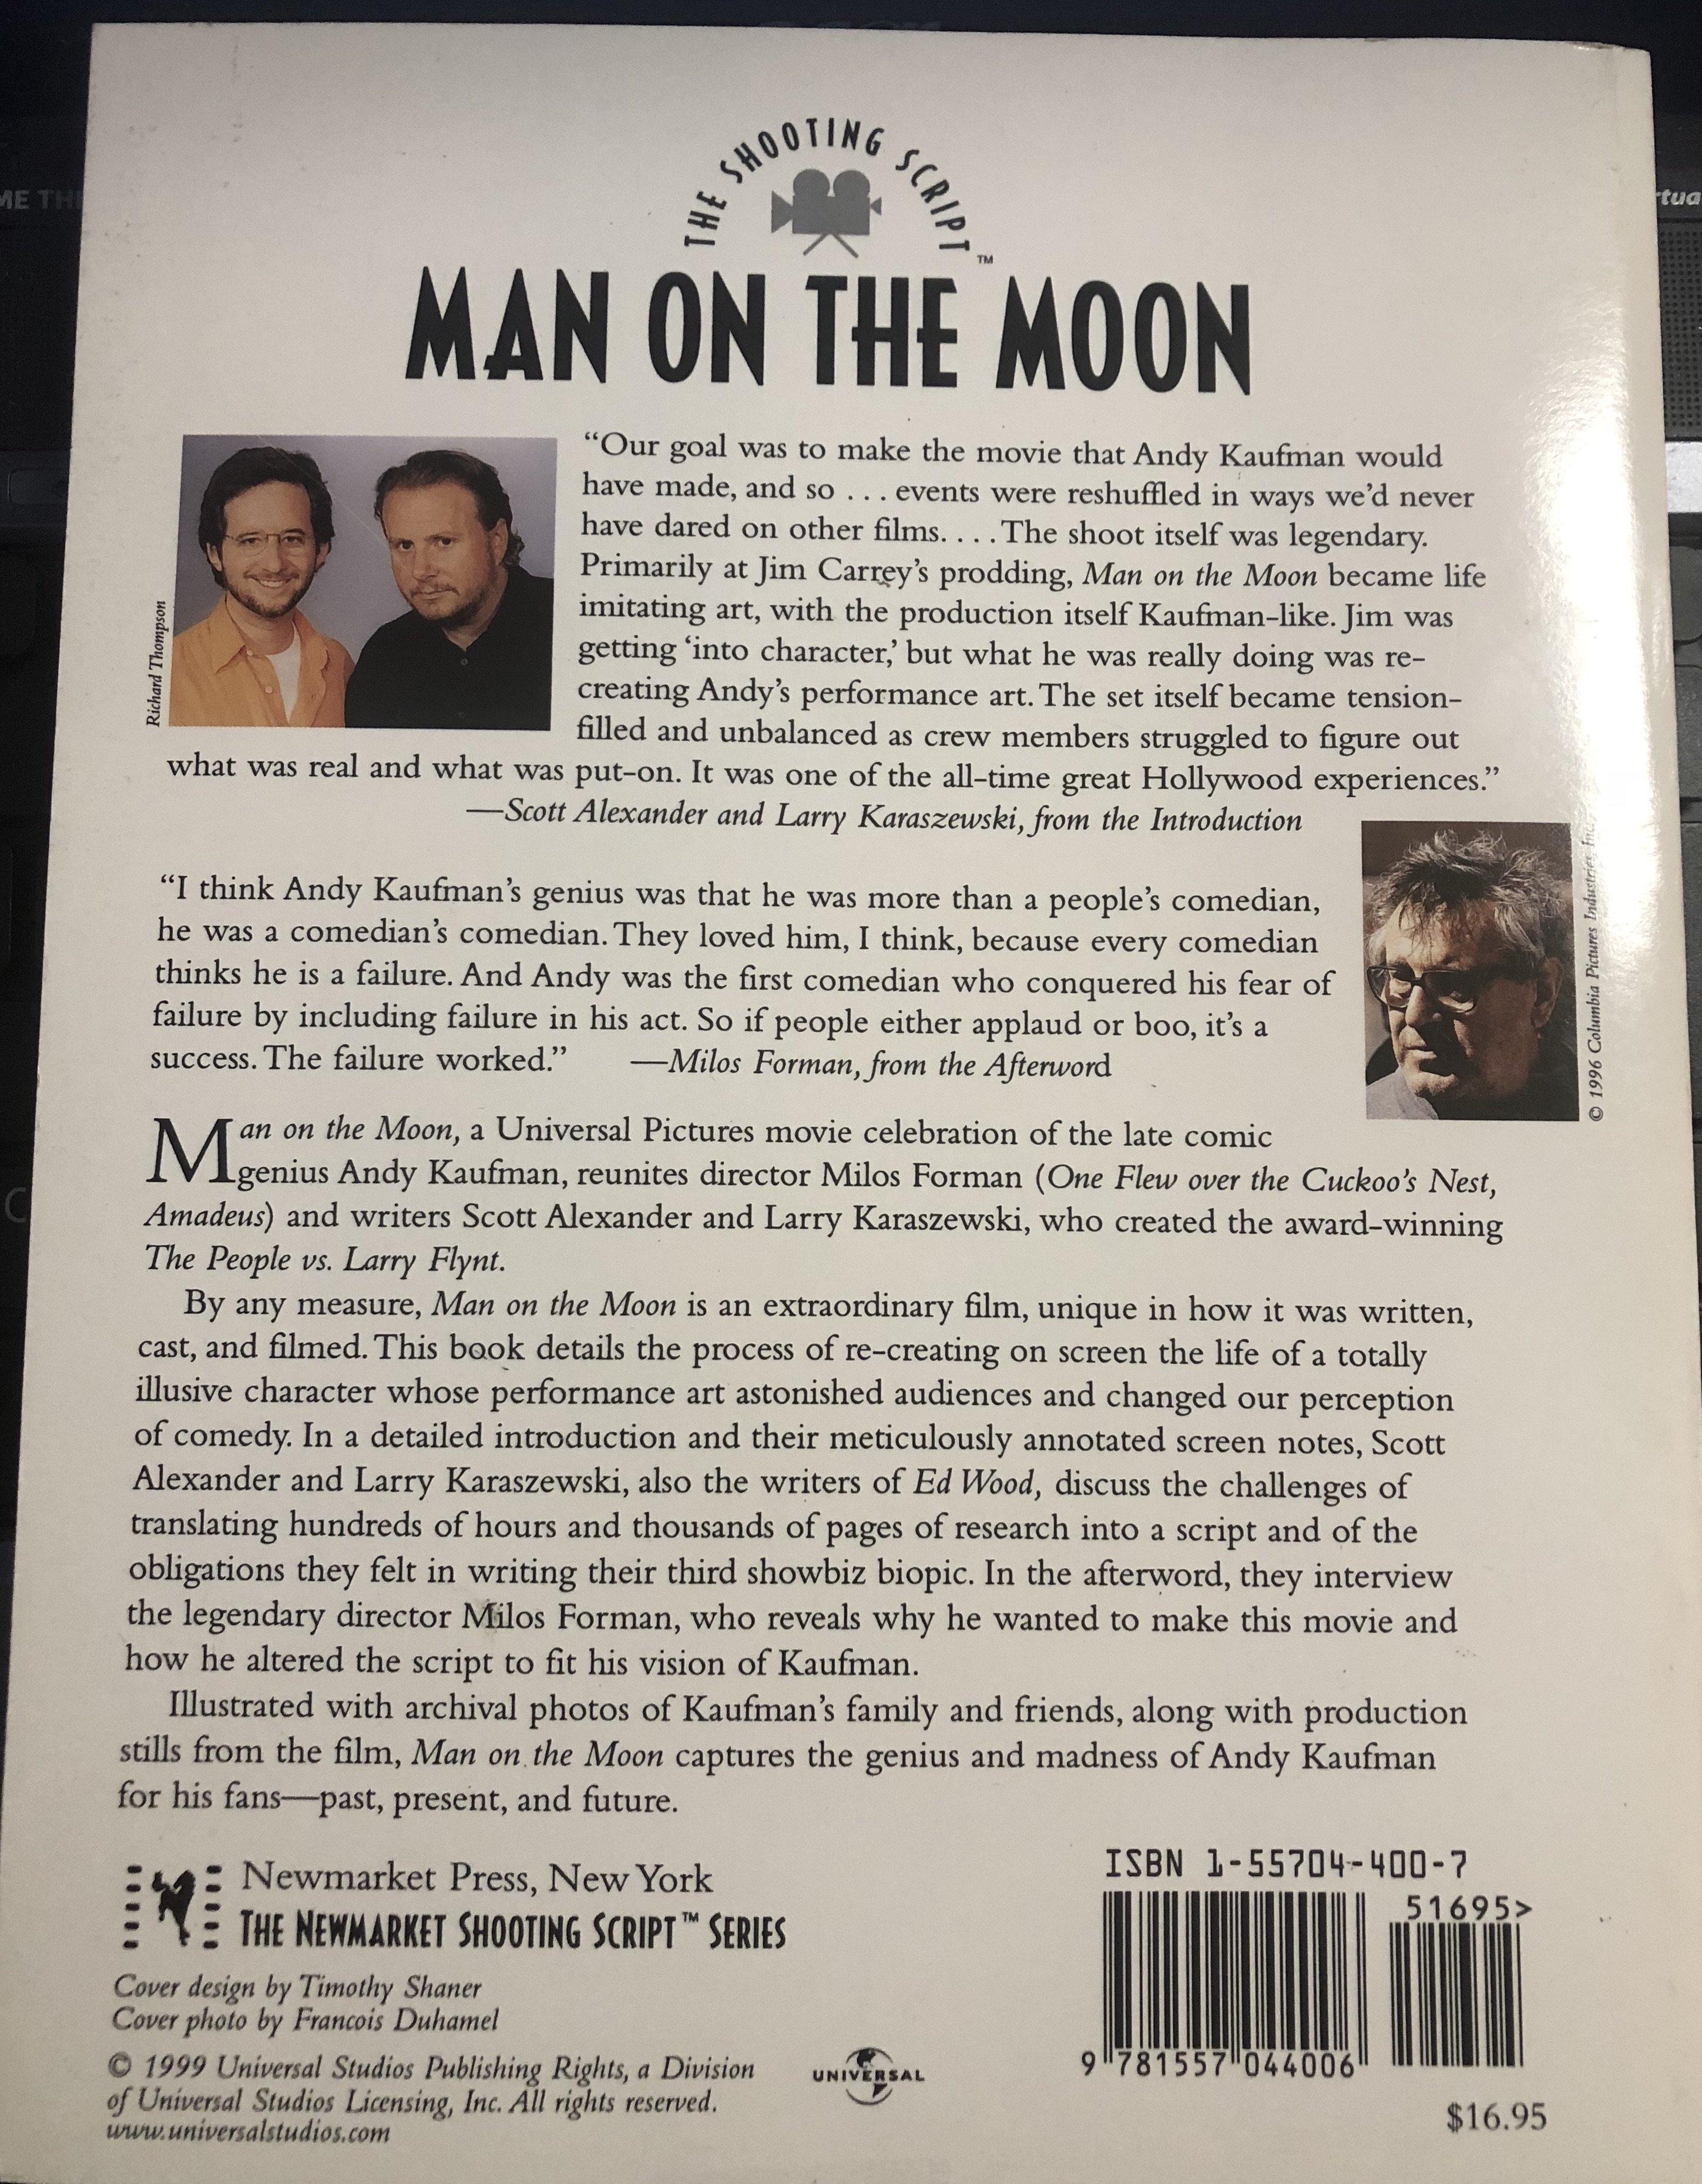 Man on the Moon: The Shooting Script (Newmarket Shooting Script) - Belfast Books